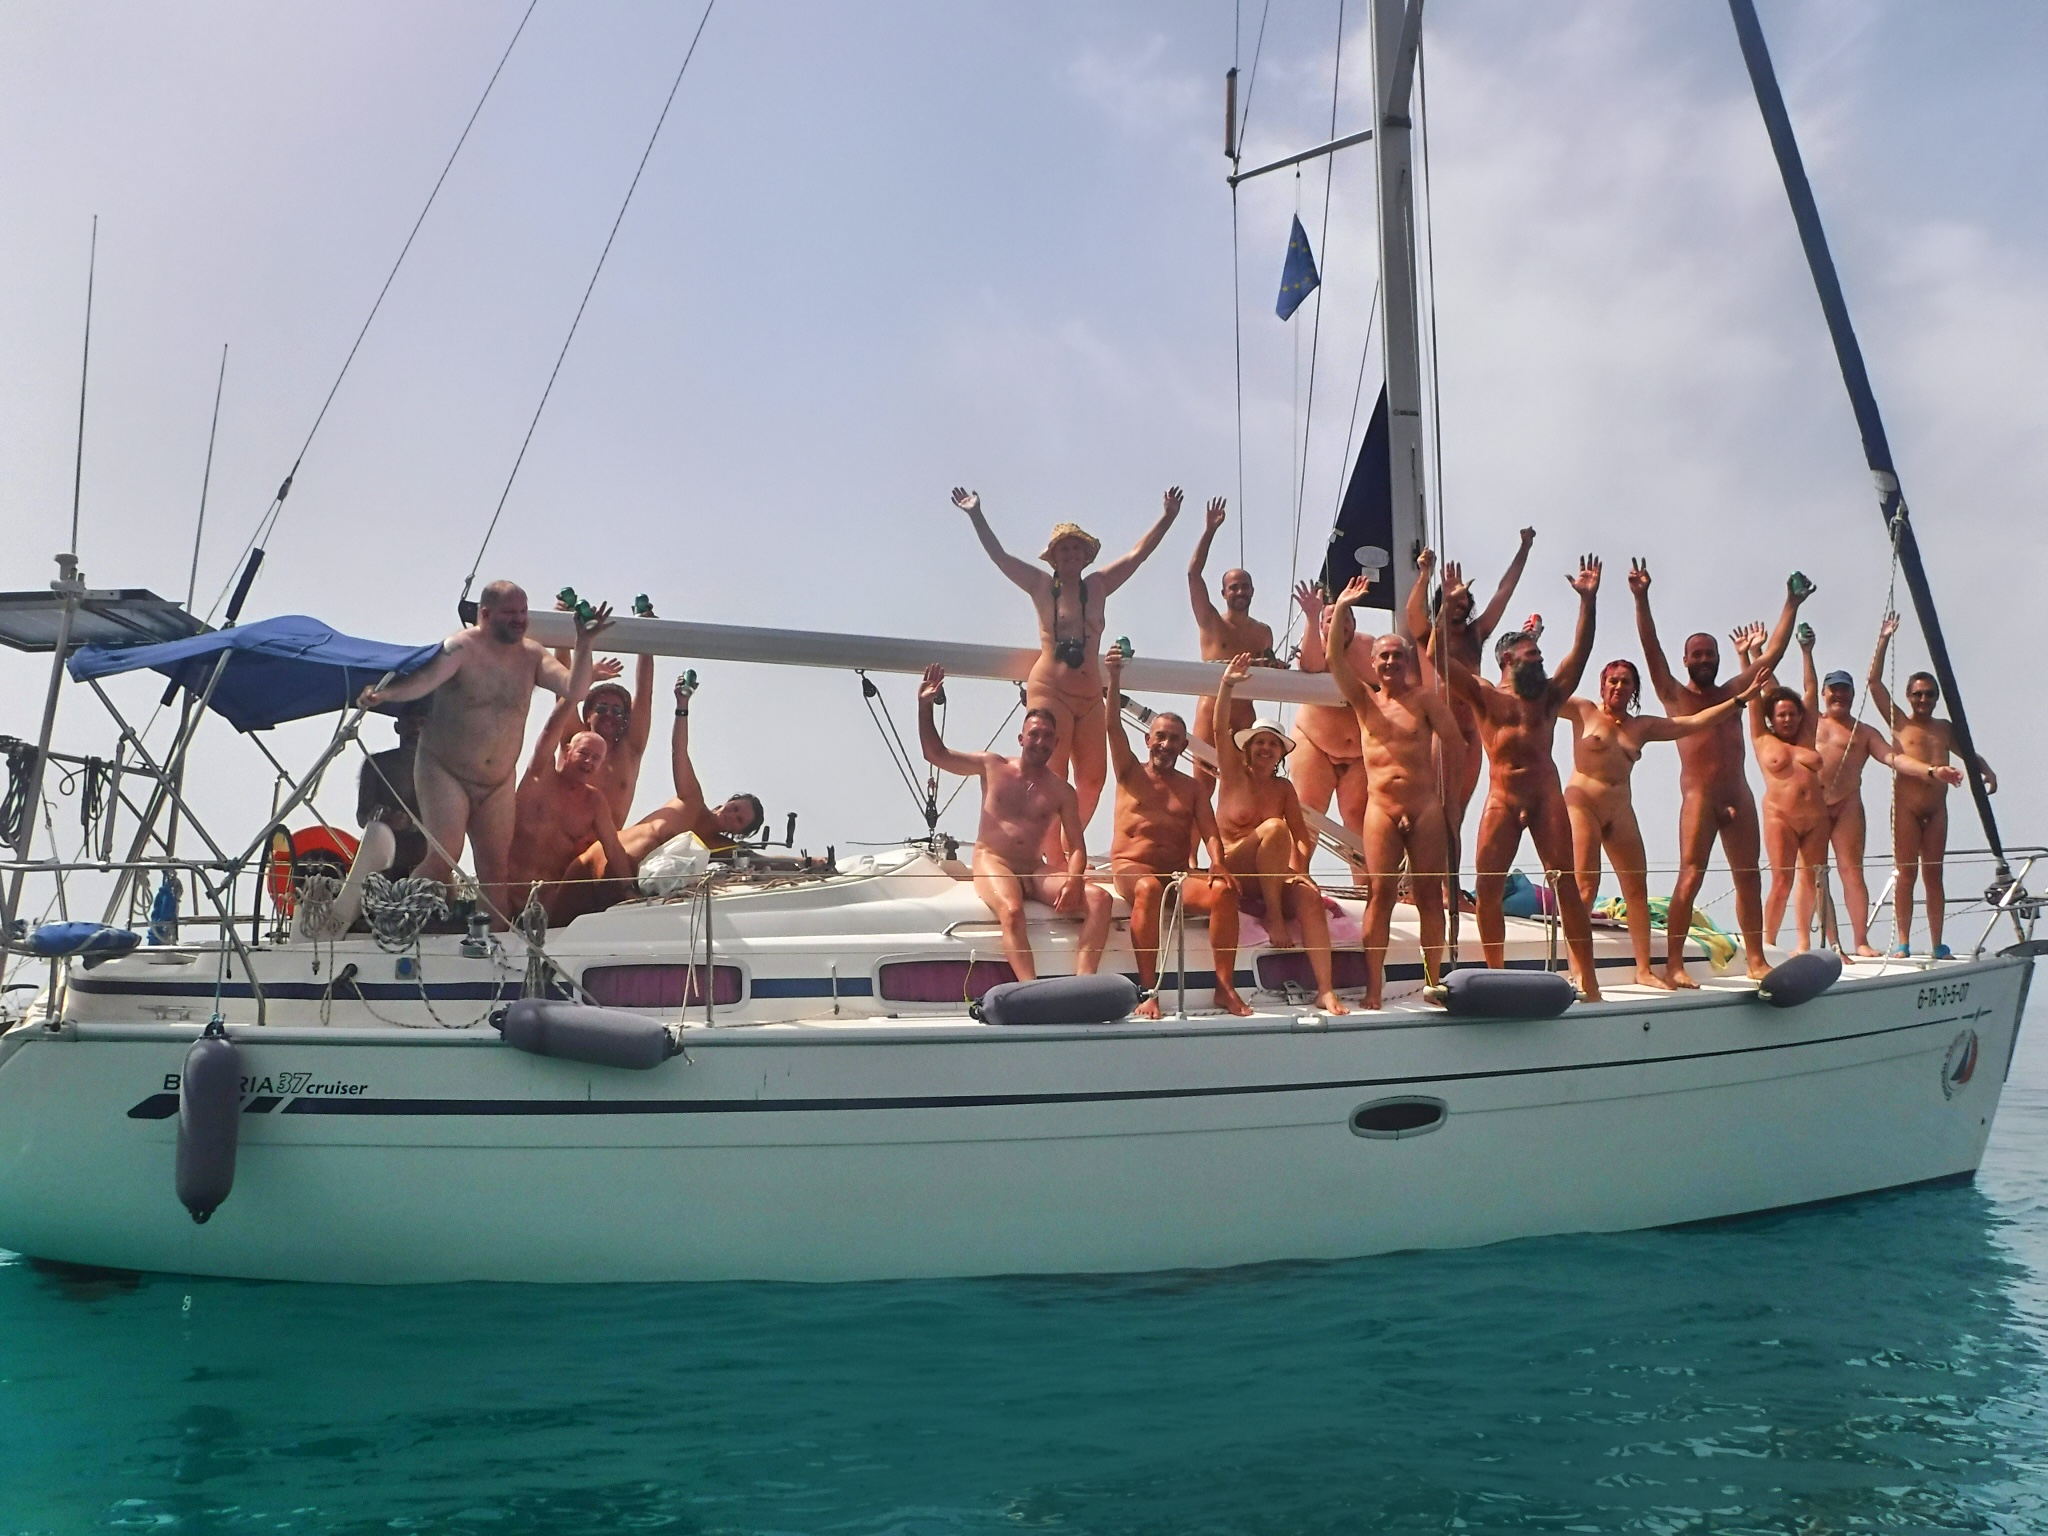 Paseo nudista en barco